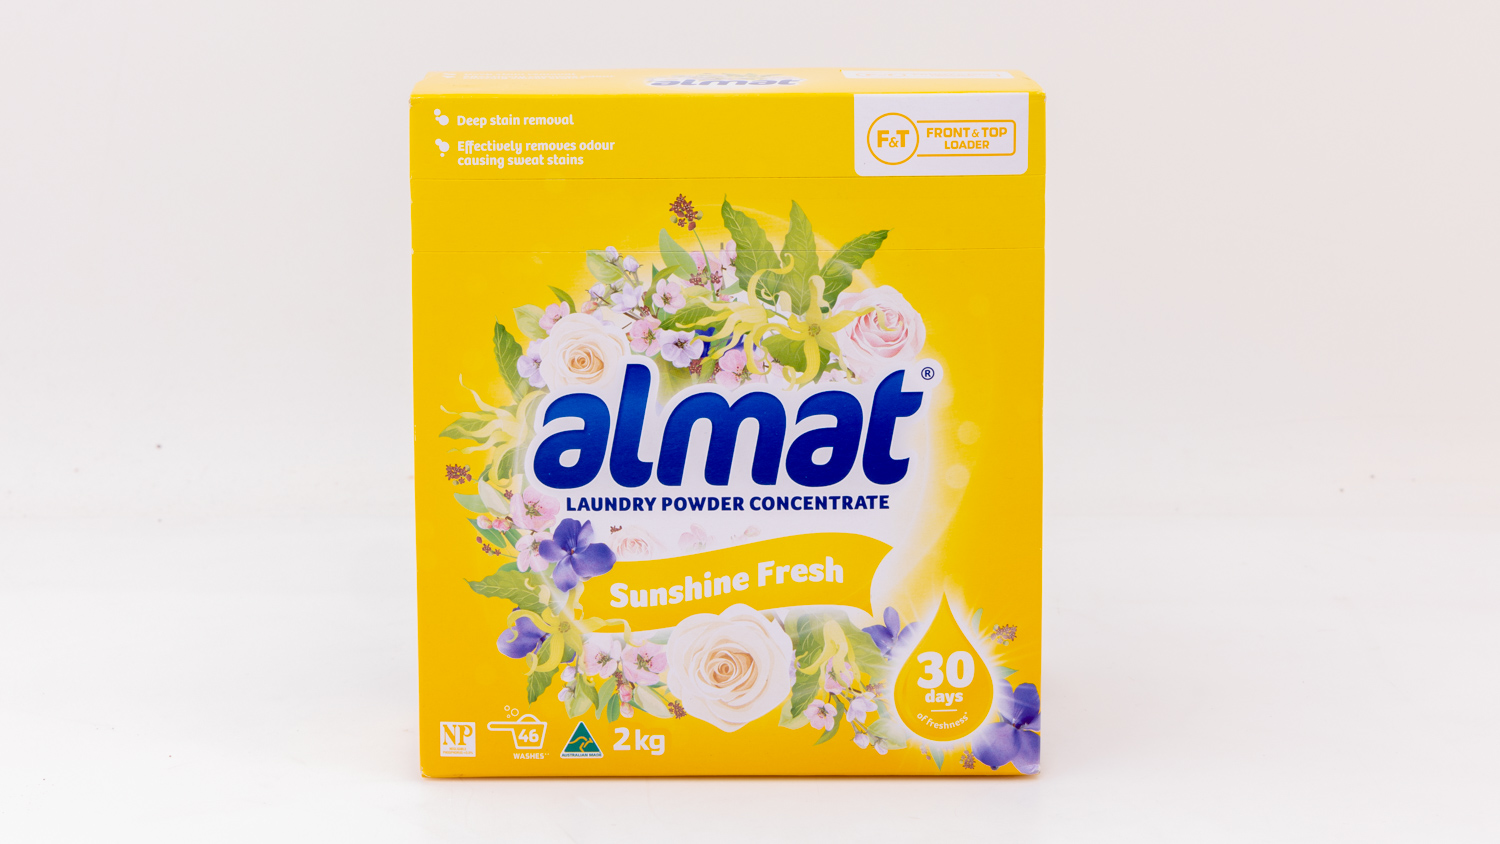 Aldi Almat Laundry Powder Concentrate Sunshine Fresh Top Loader carousel image